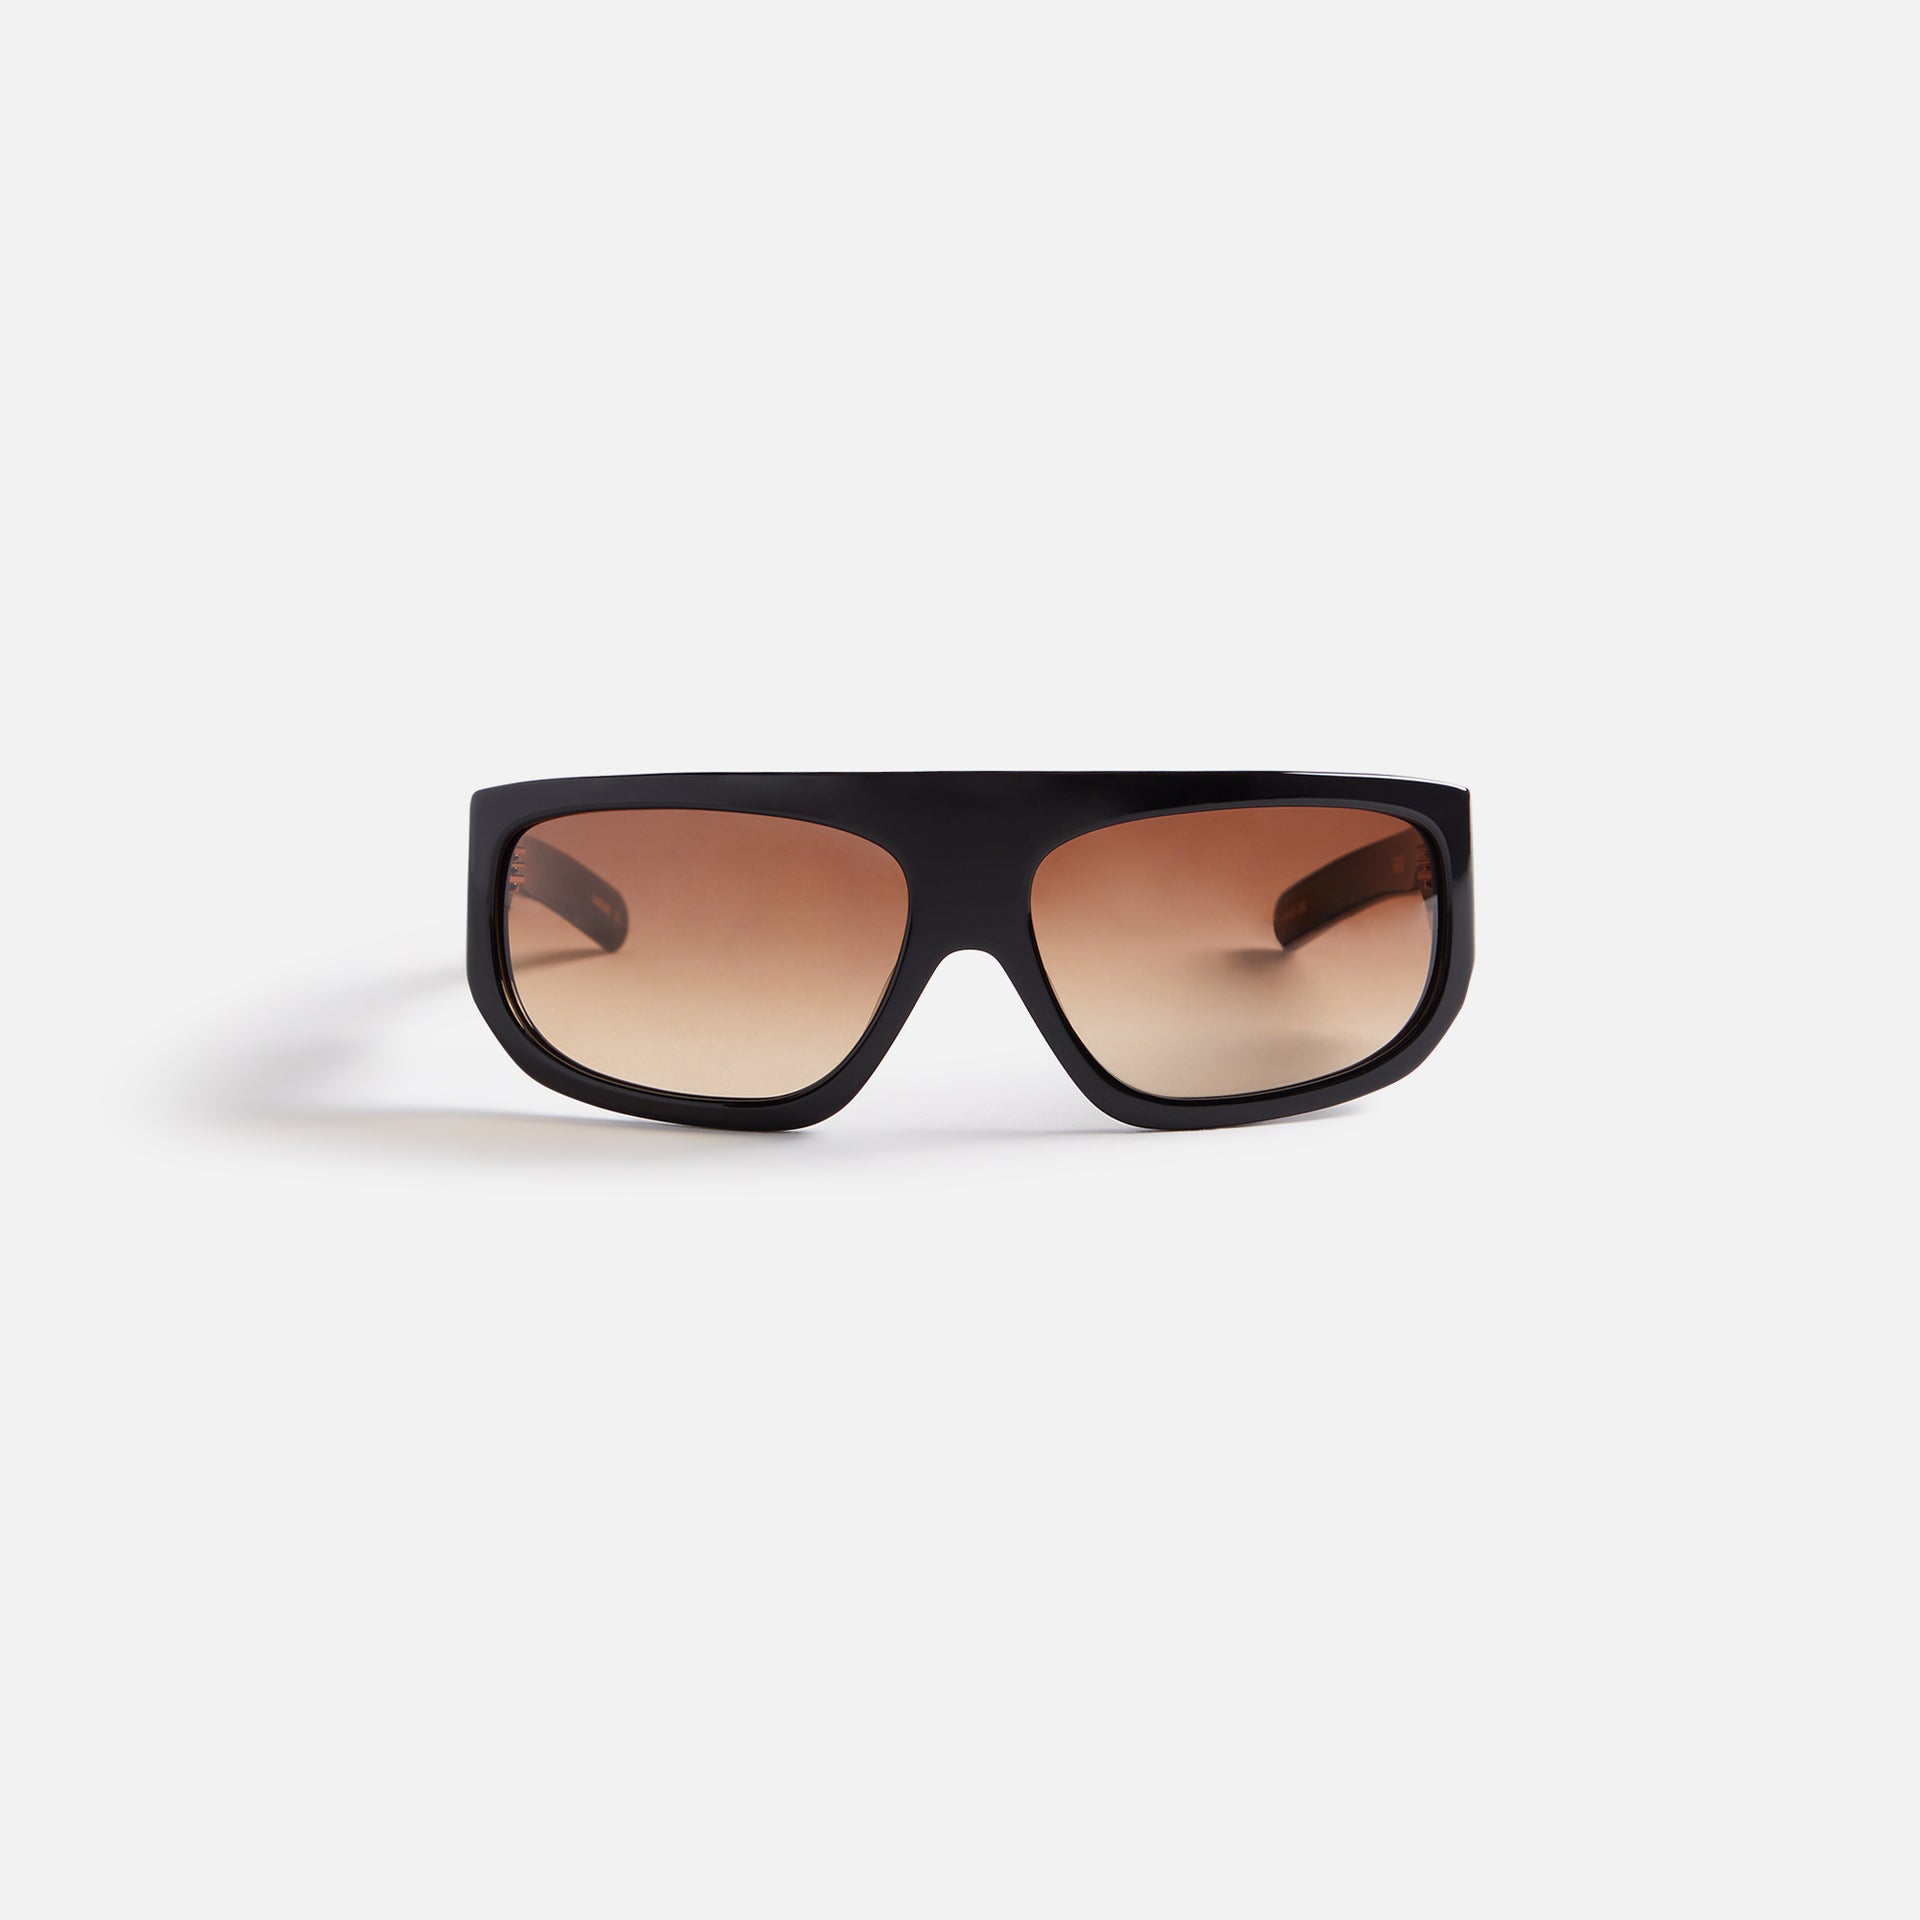 Flatlist Farah Sunglasses - Solid Black / Brown Gradient Lens